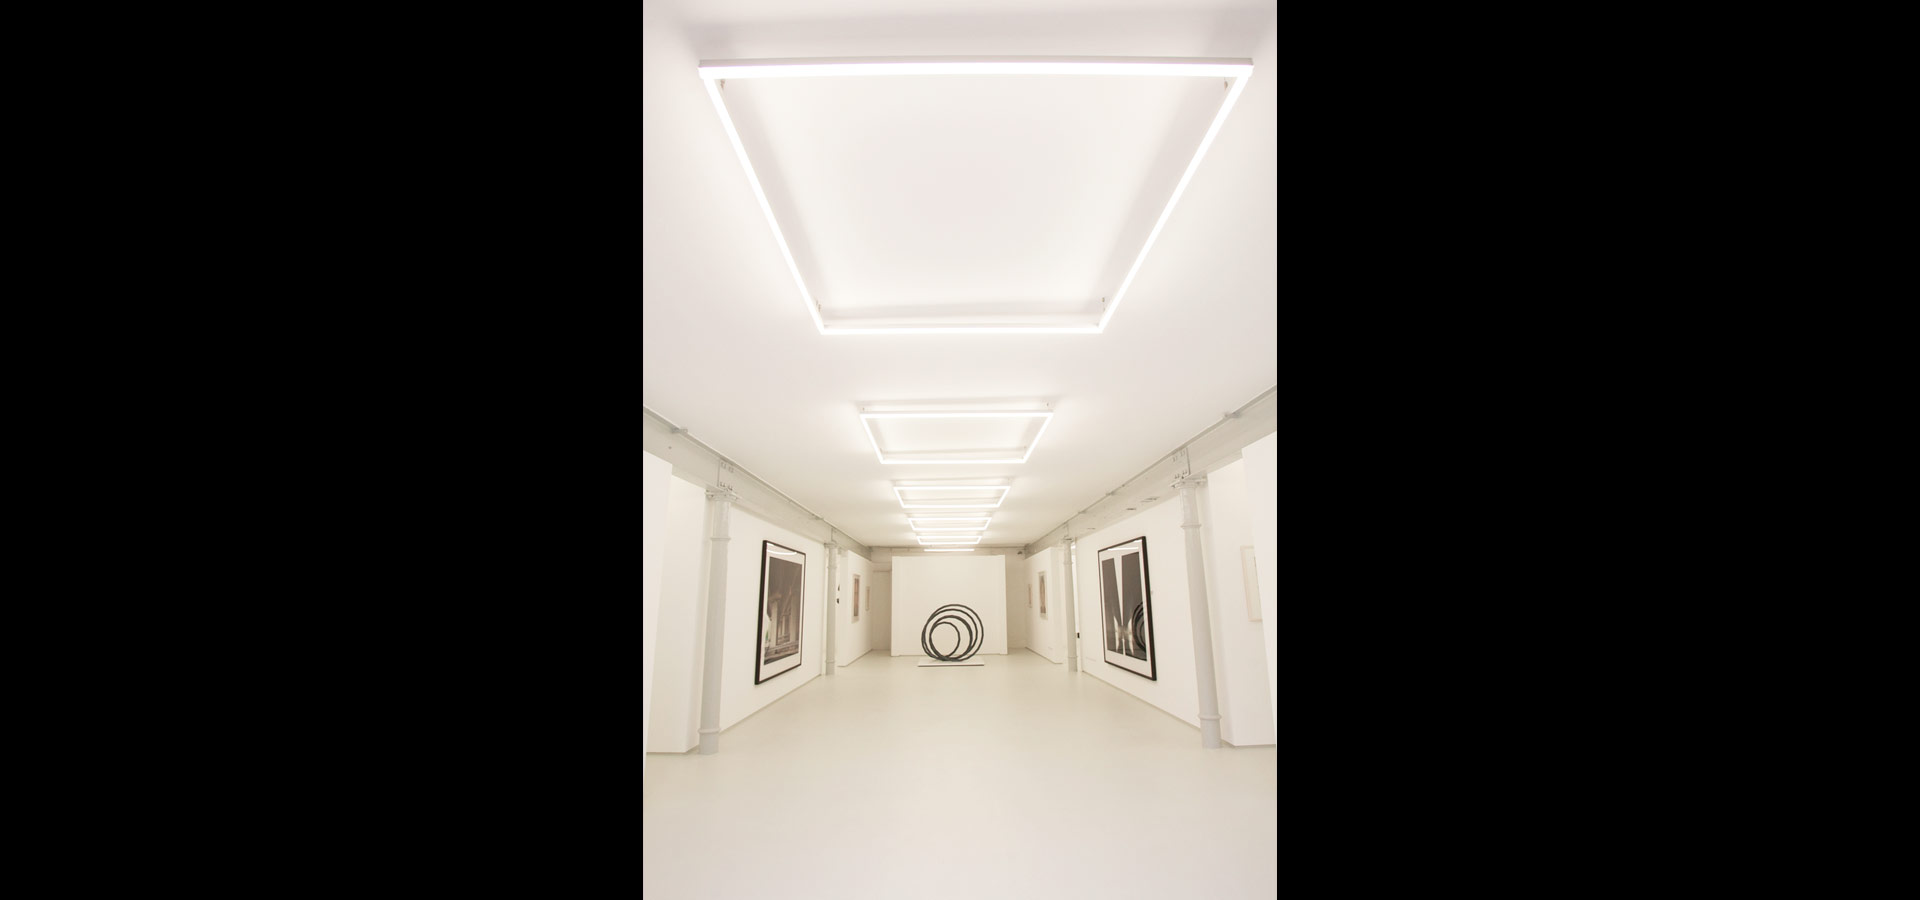 Luxsytem exhibition lighting light band with optimal illumination